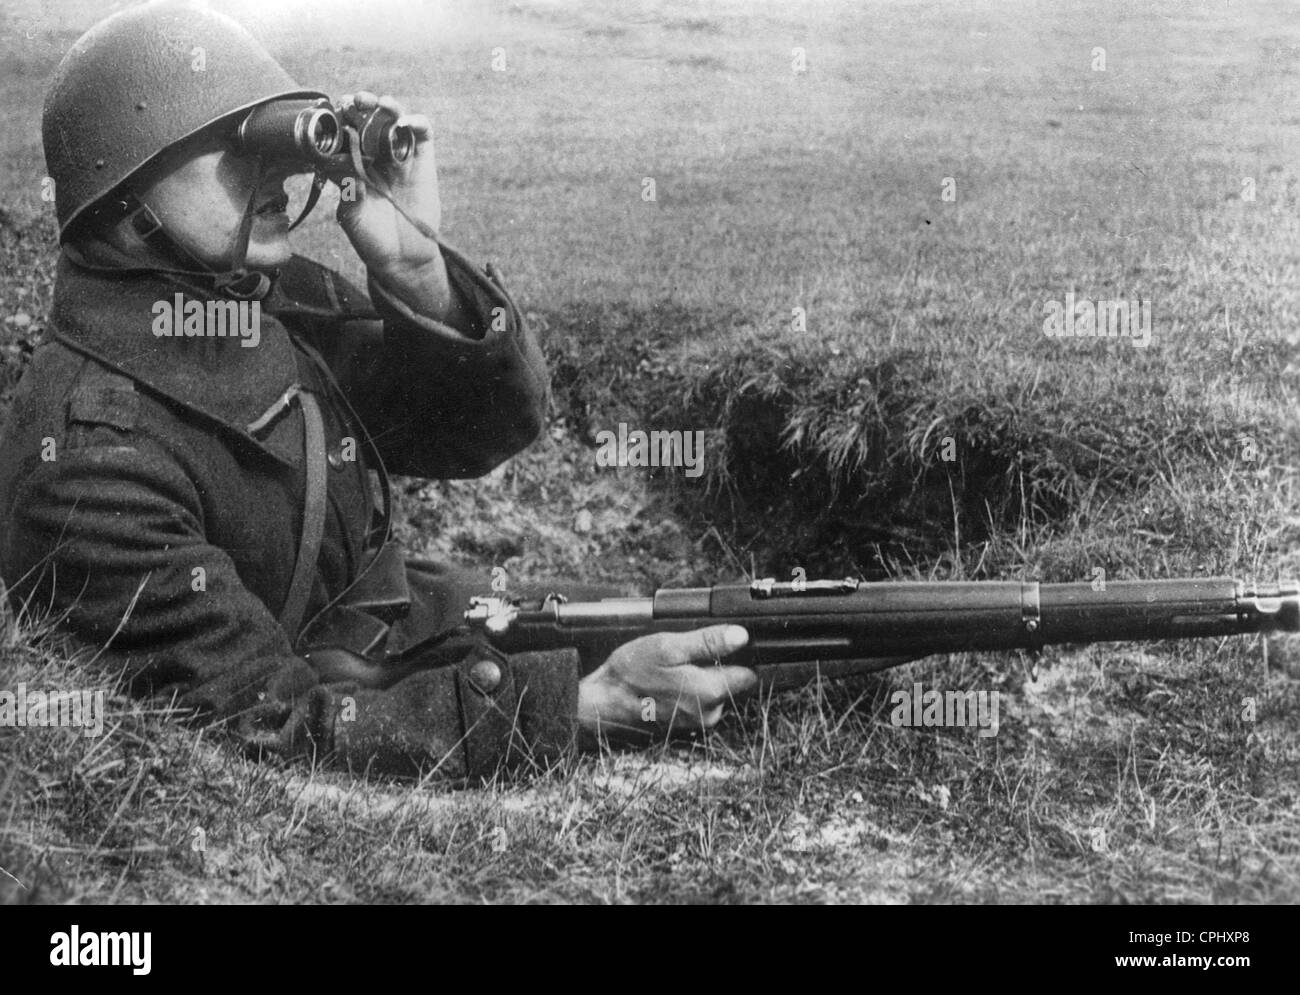 polish-soldier-1939-CPHXP8.jpg